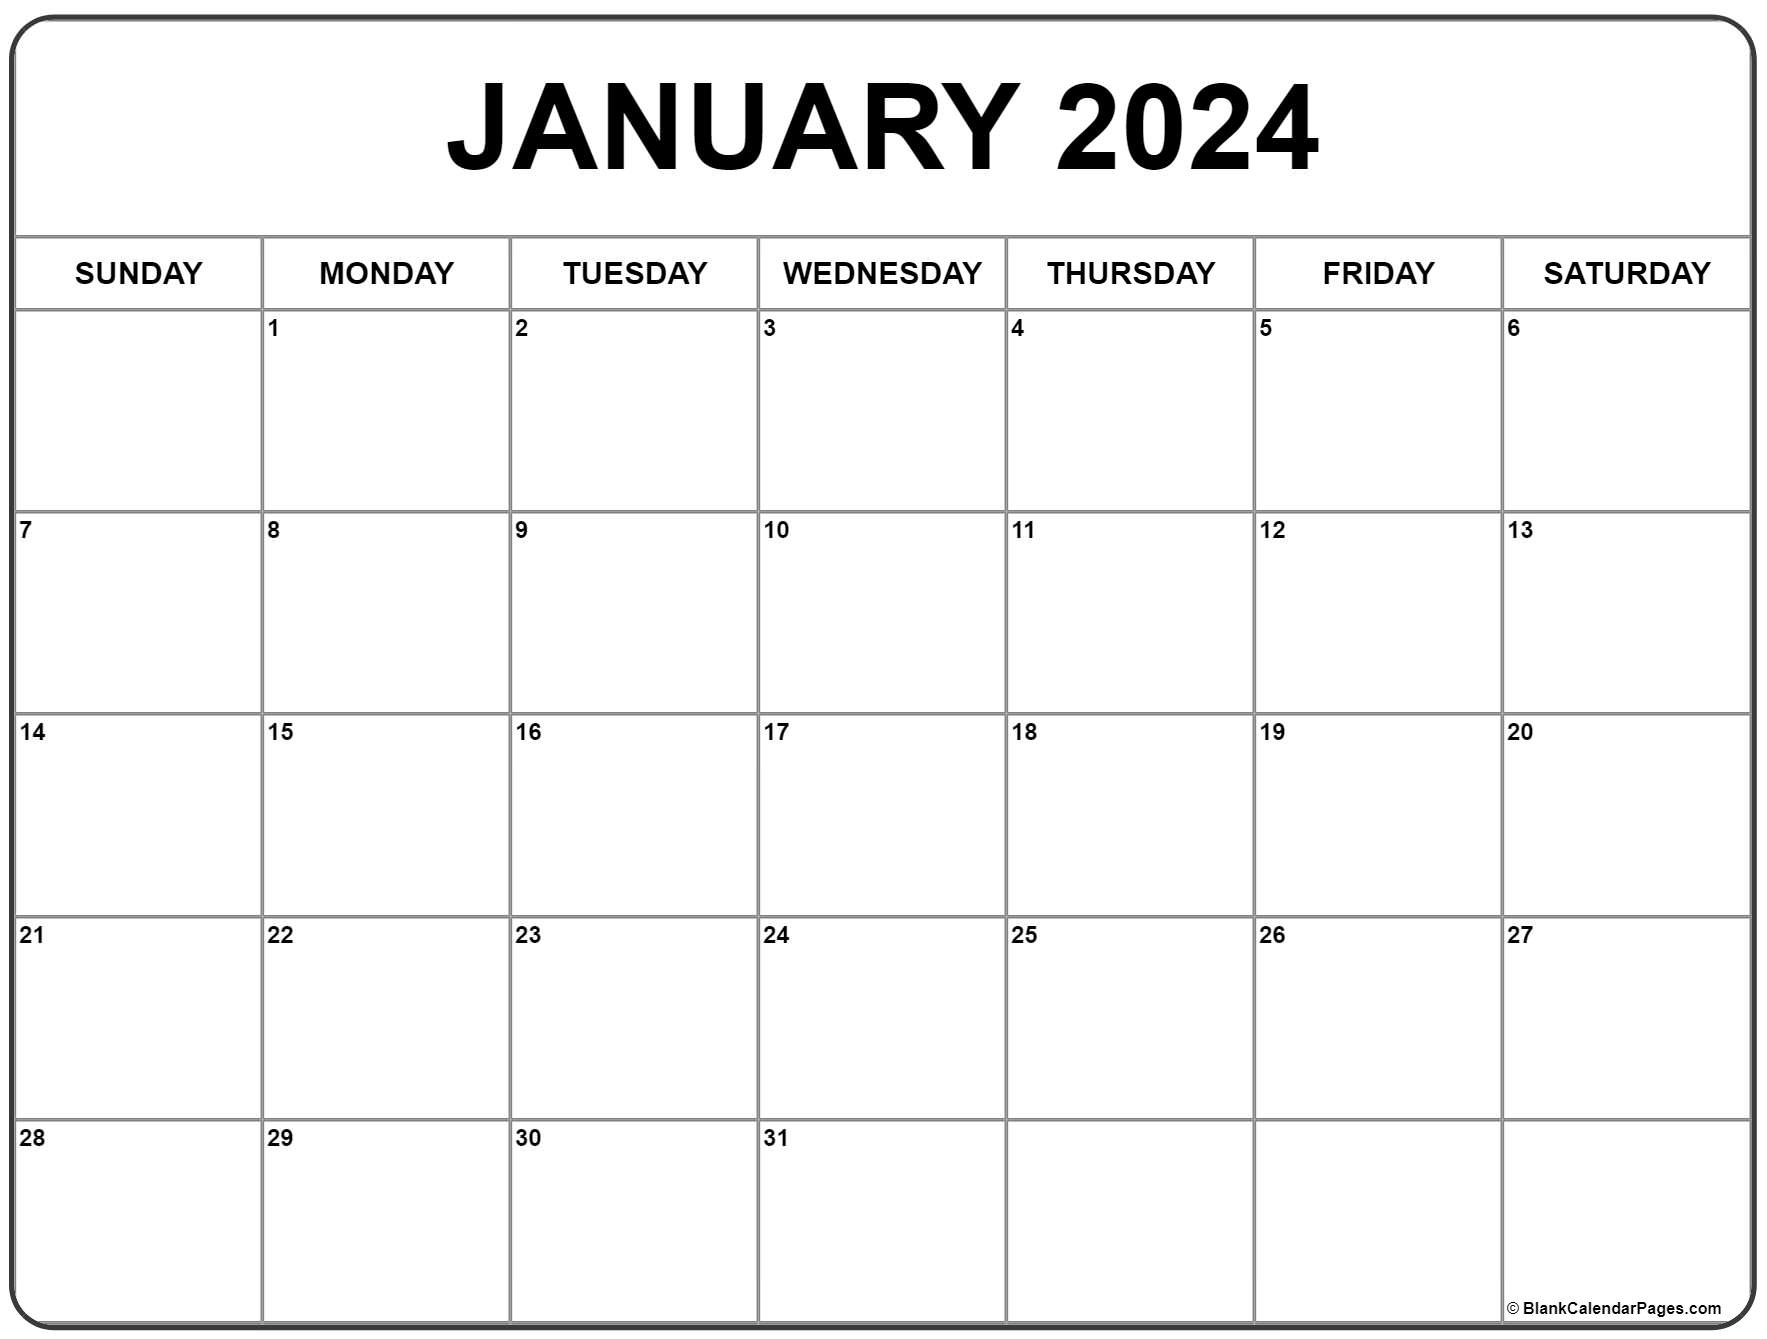 January 2024 Calendar | Free Printable Calendar for Free Printable Blank Calendar January 2024